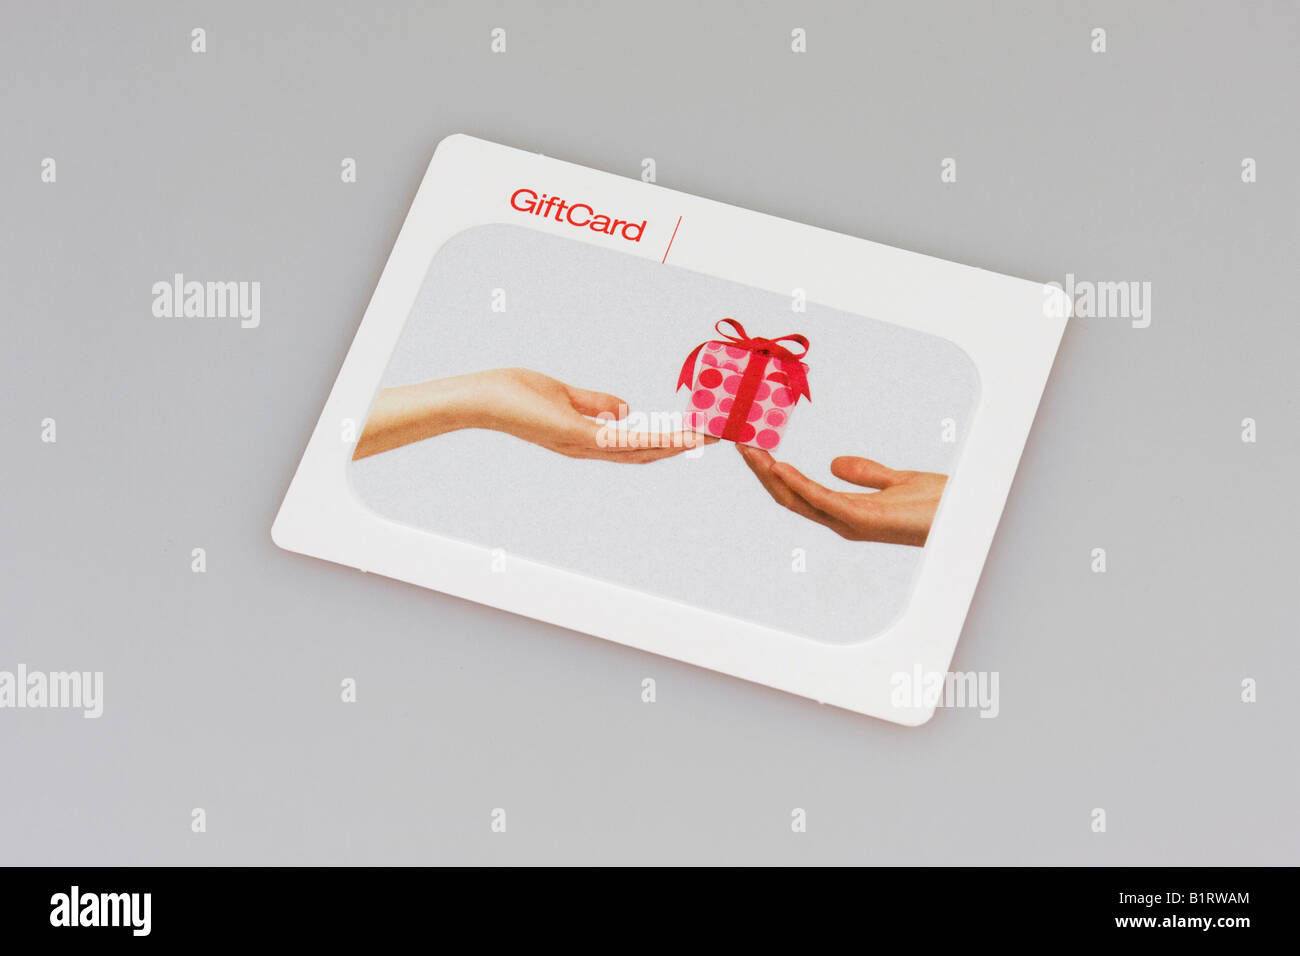 Target certificato regalo, la carta regalo Foto Stock